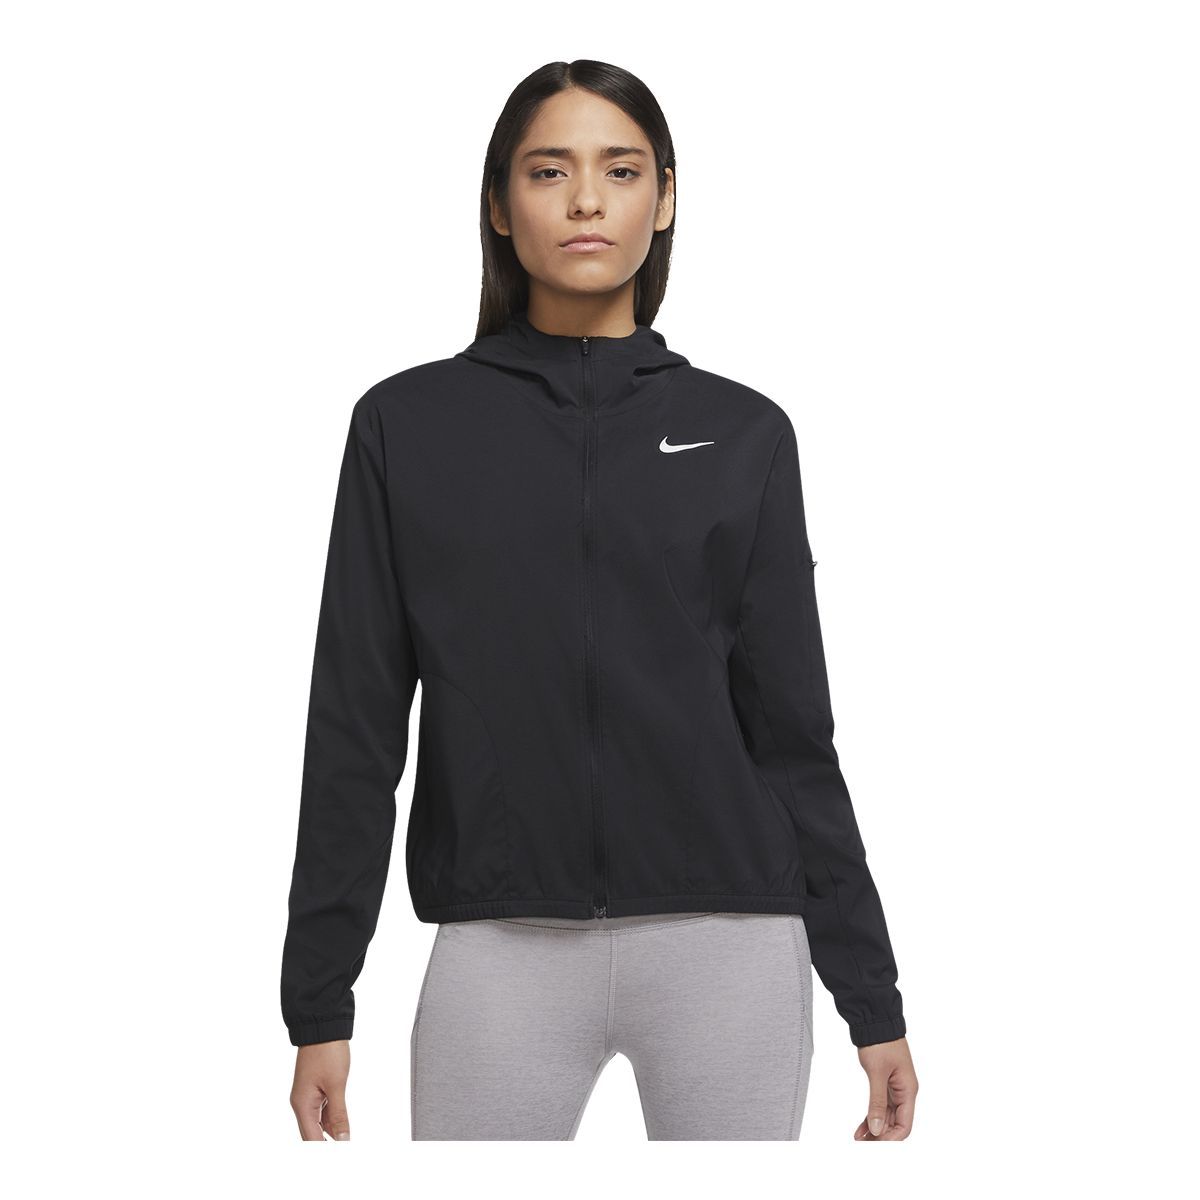 Nike Women's Run Impossibly Light Jacket